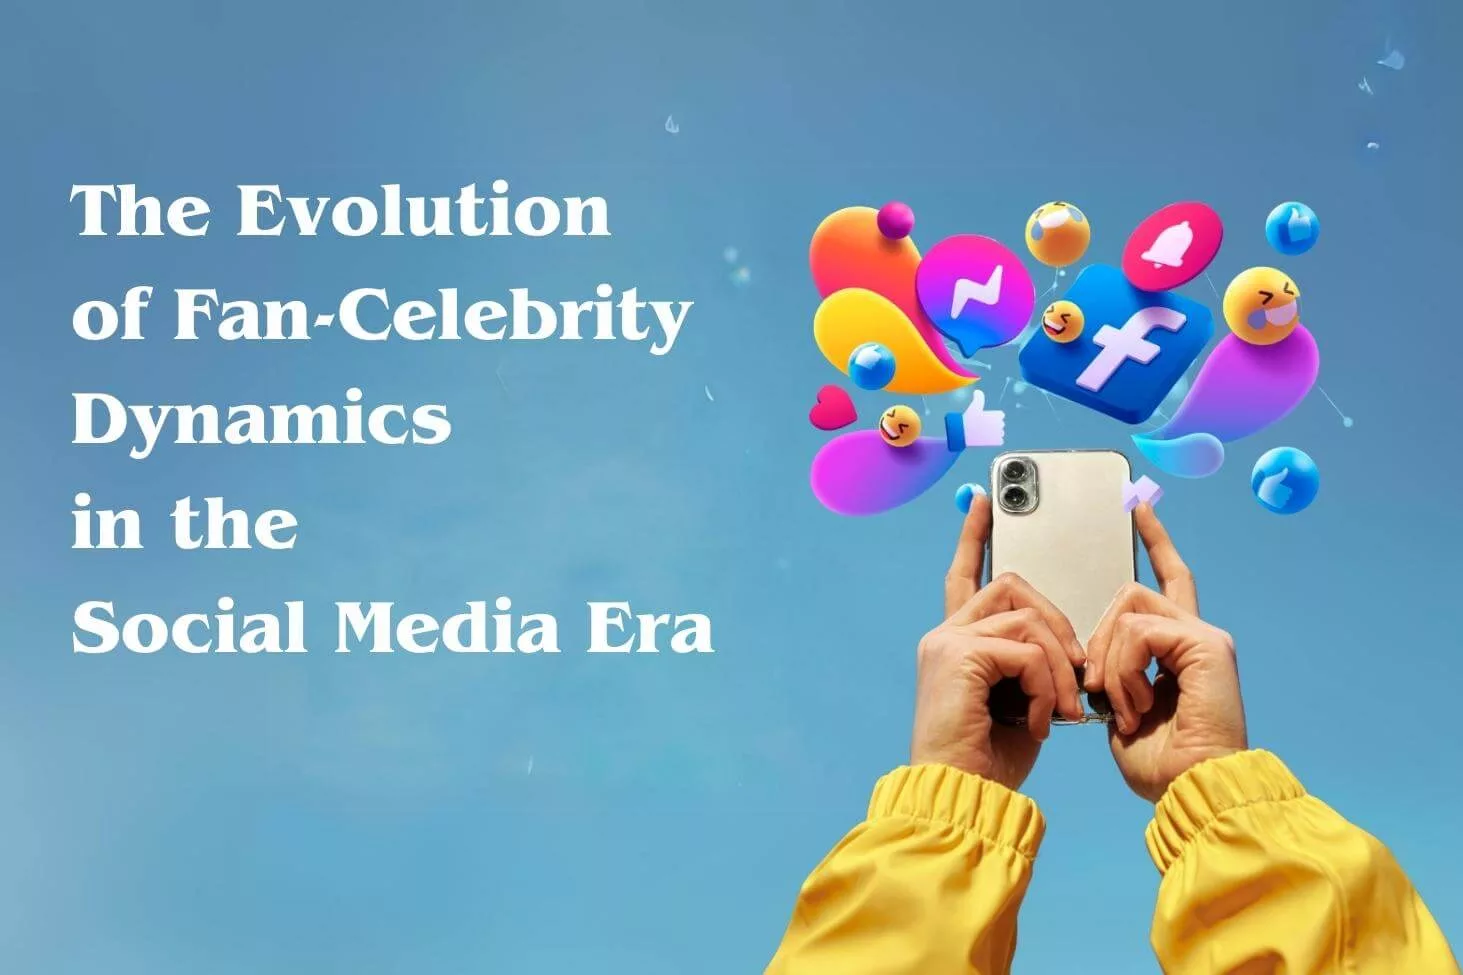 The Evolution of Fan-Celebrity Dynamics in the Social Media Era